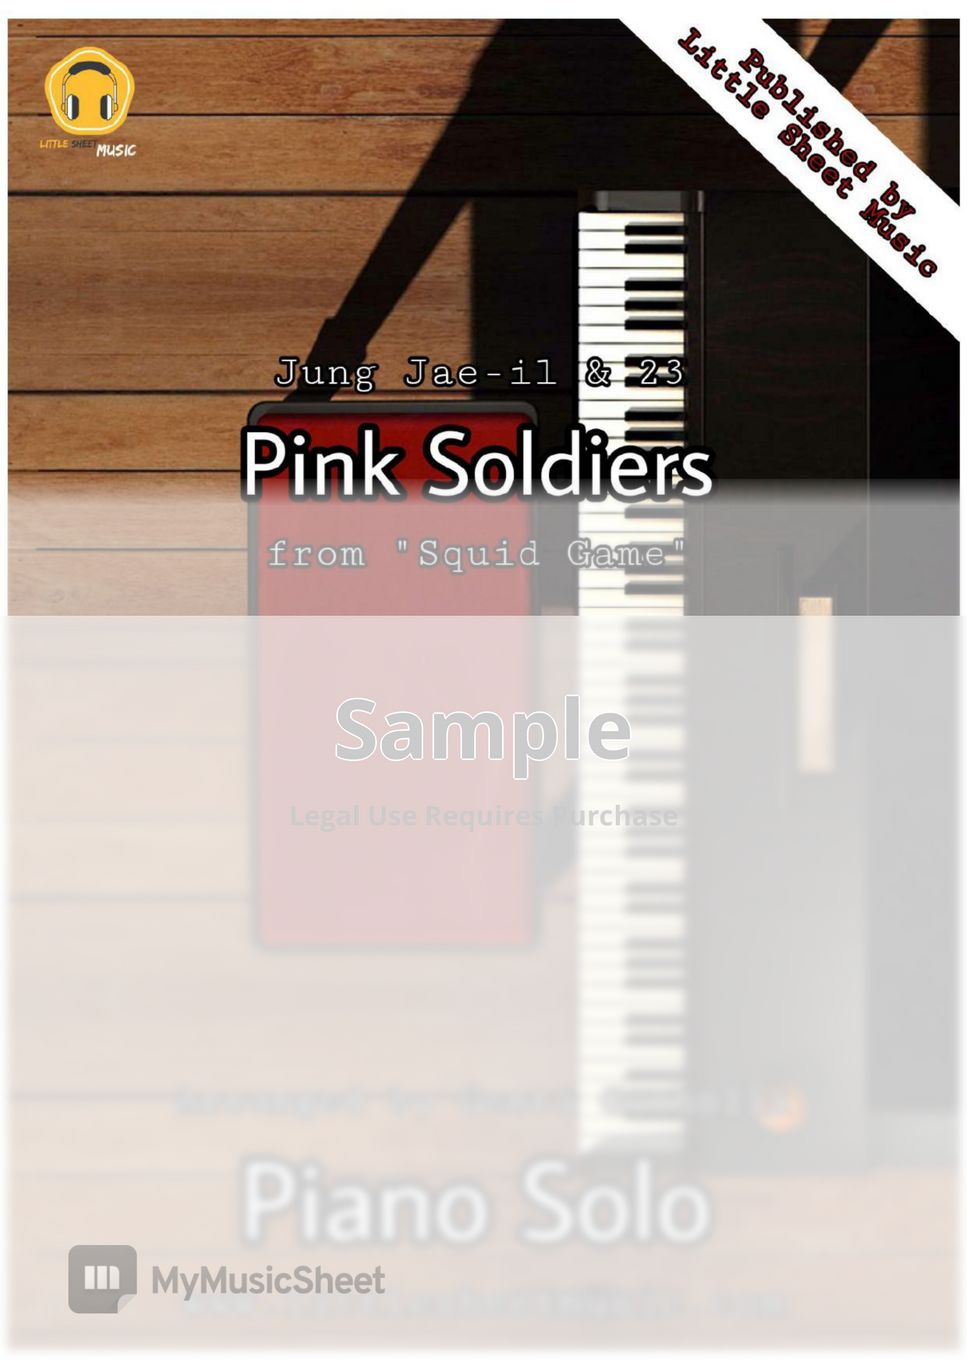 Jung Jae-il - Pink Soldiers by Genti Guxholli